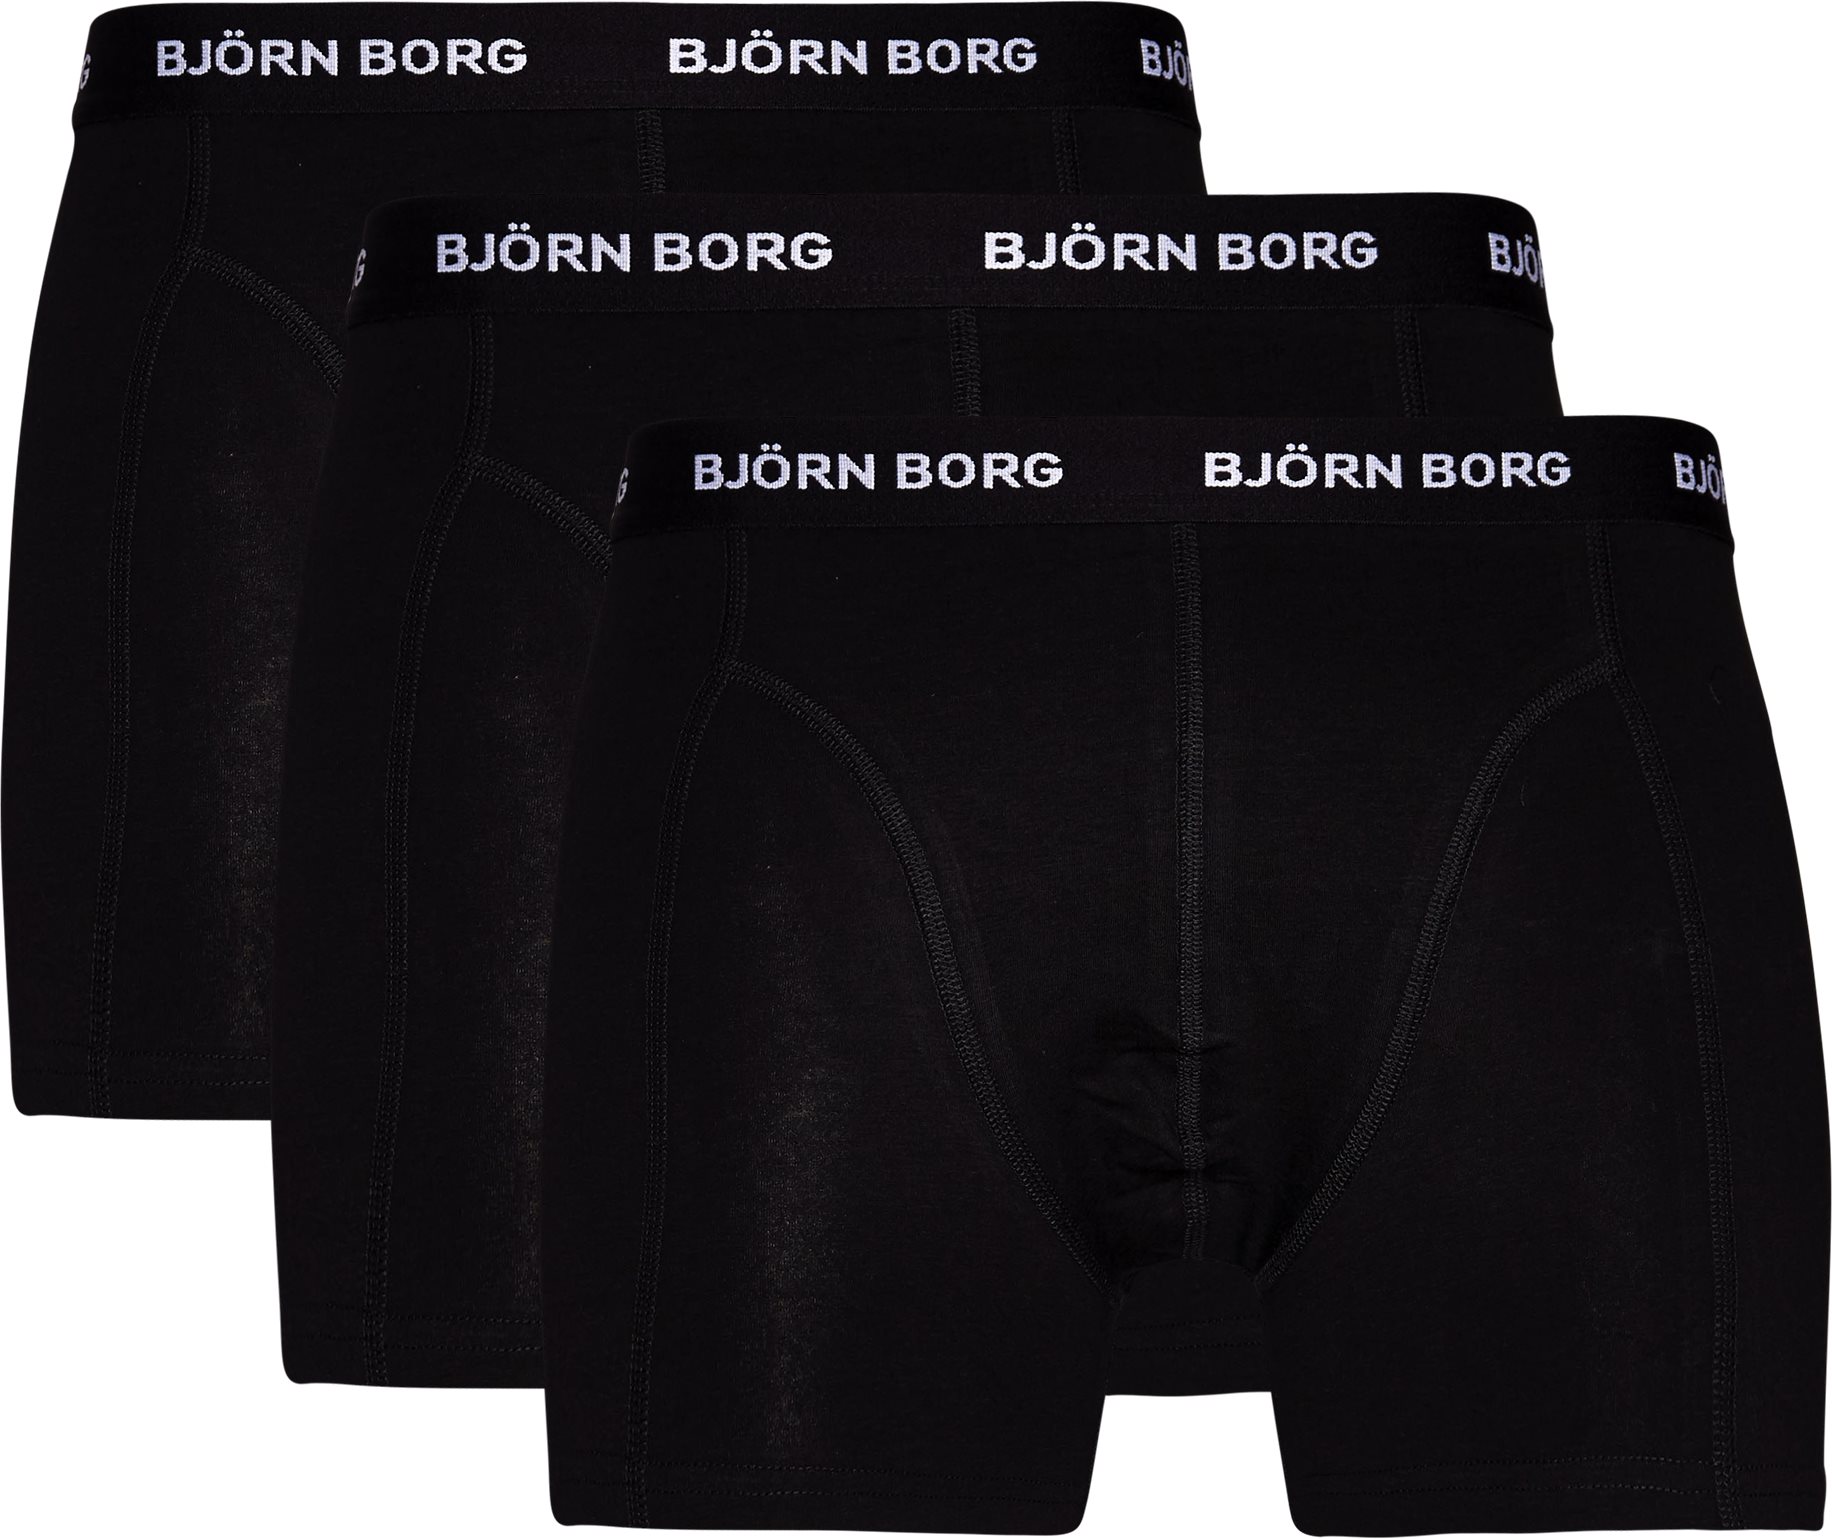 B9999-1024-90011 - Underwear - Regular fit - Black